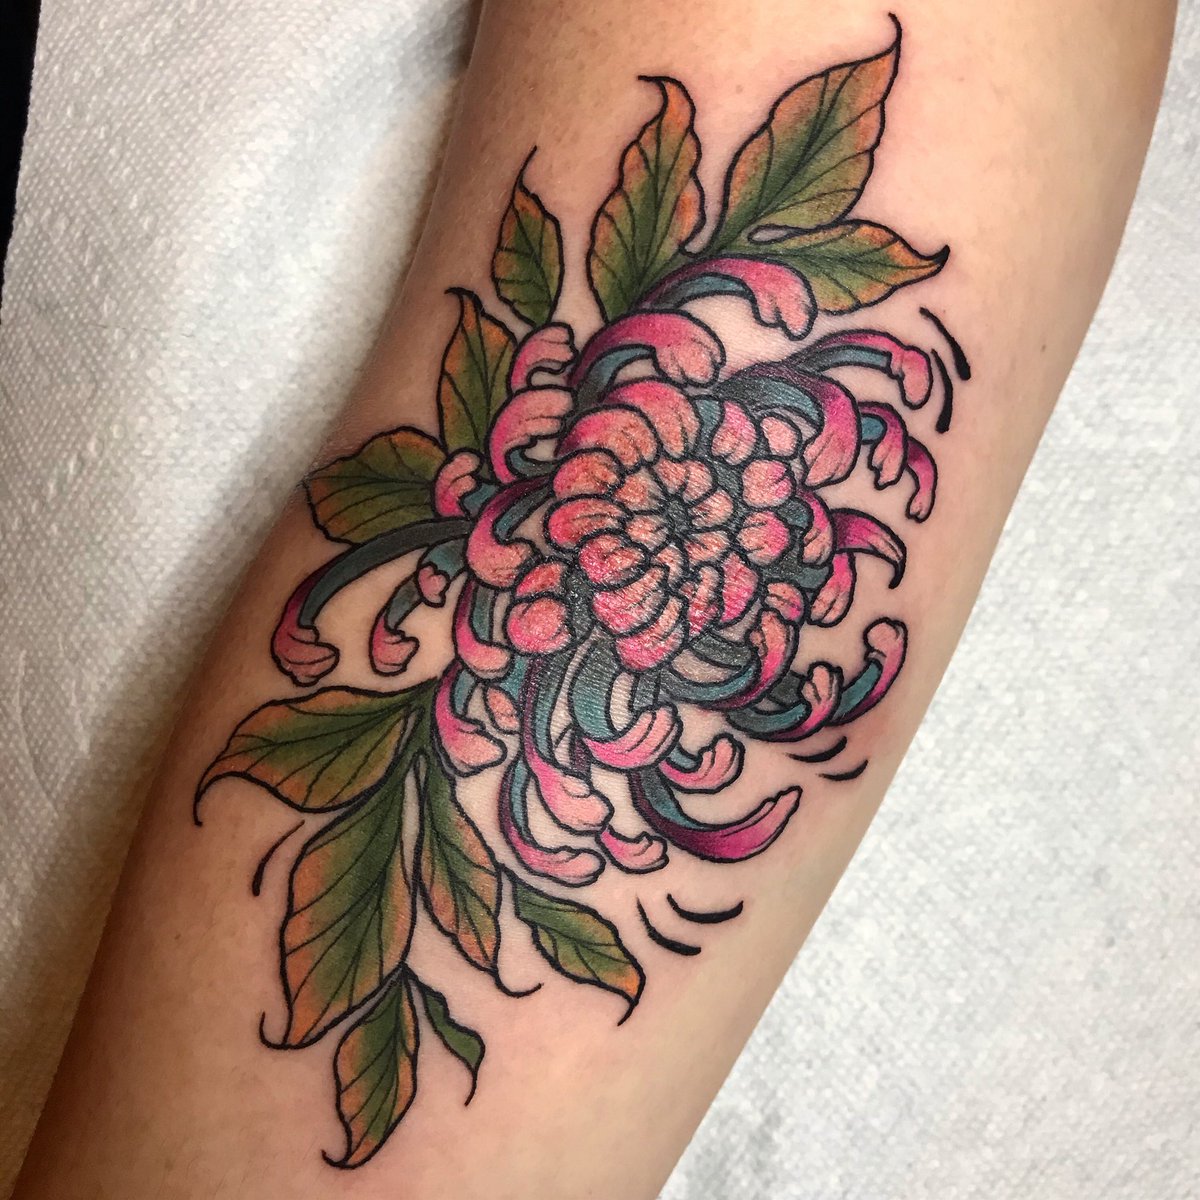 Chrysanthemum tattoo from a while ago 
•
•
•
#tat #tattoo #tattoos #design #art #artist #dallas #dallastattoo #dallastattooartist #texasinked #texastattoo #texastat #femaletattooartist #floral #floraltattoo #flower #Chrysanthemum